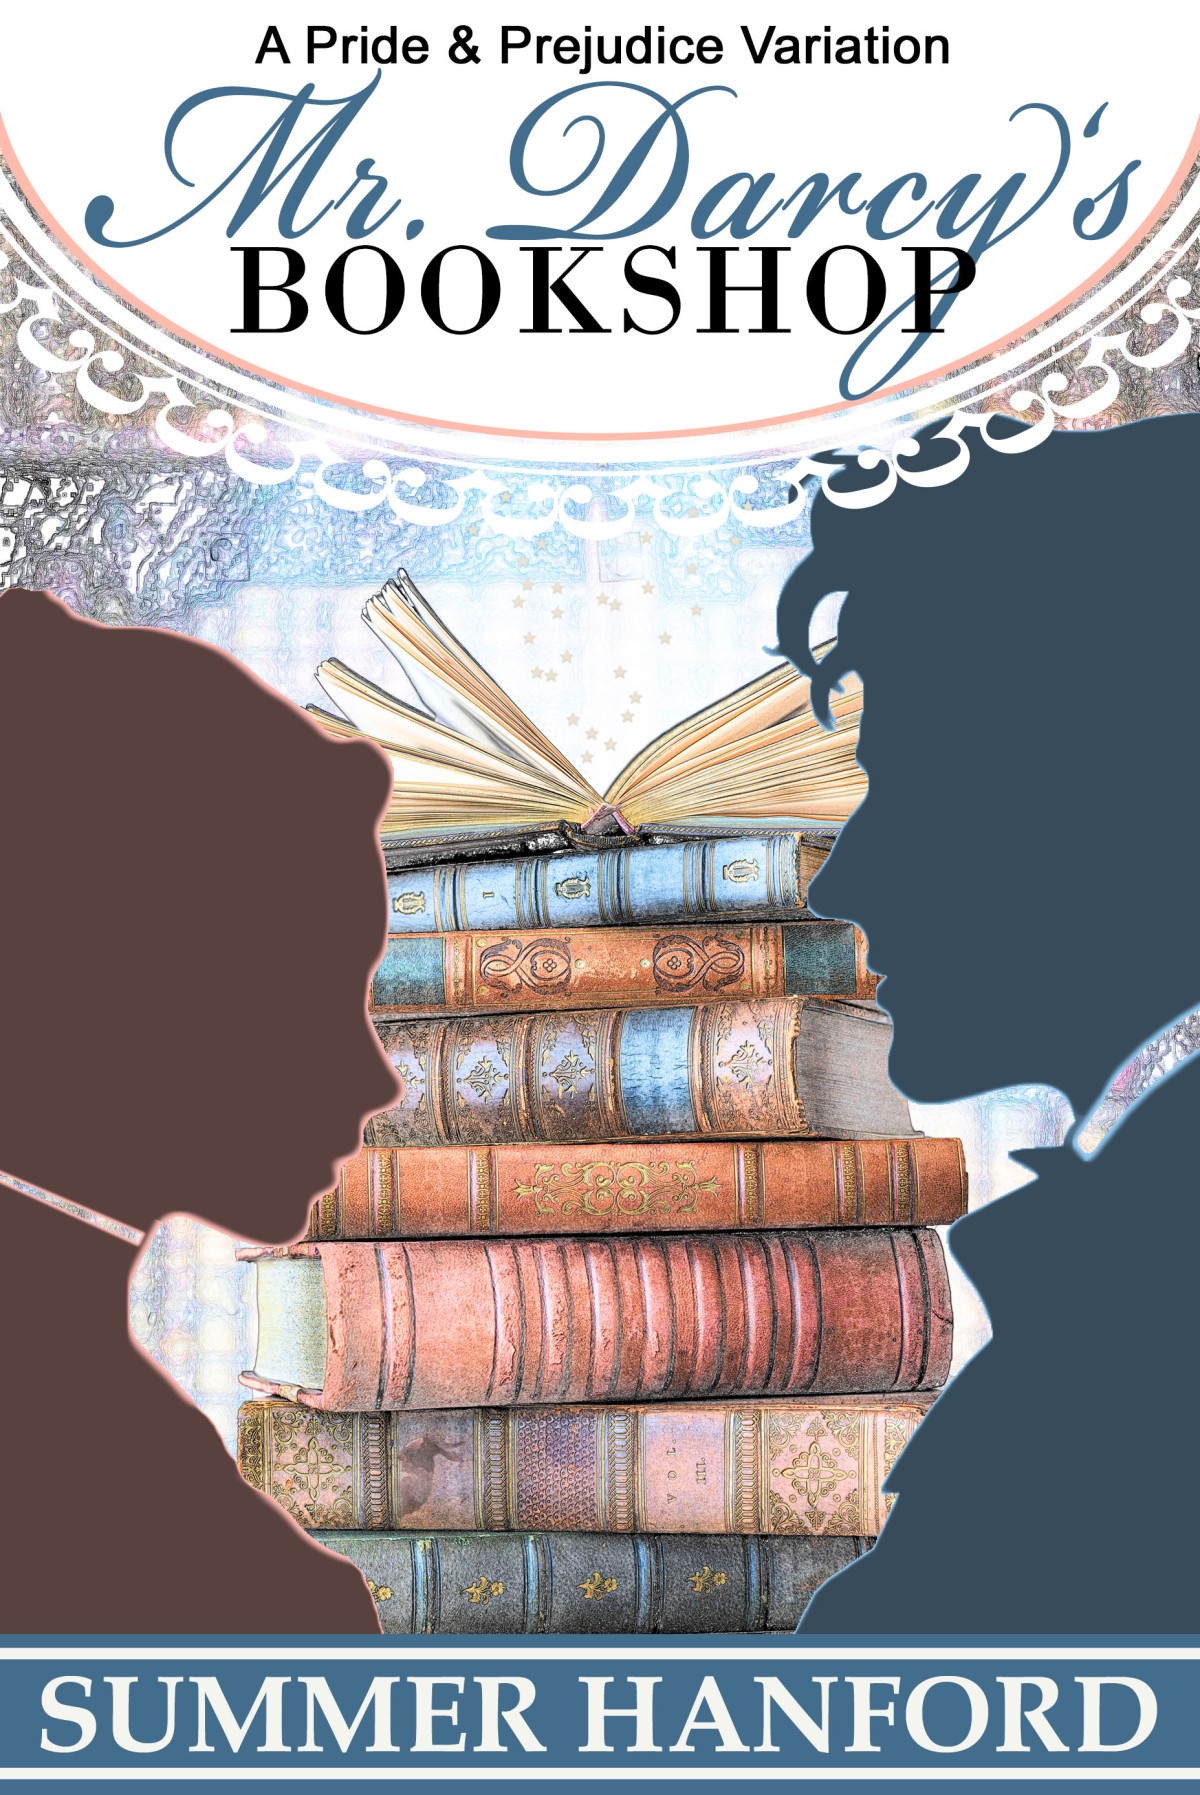 “Mr. Darcy’s Bookshop” by Summer Hanford, excerpt + giveaway